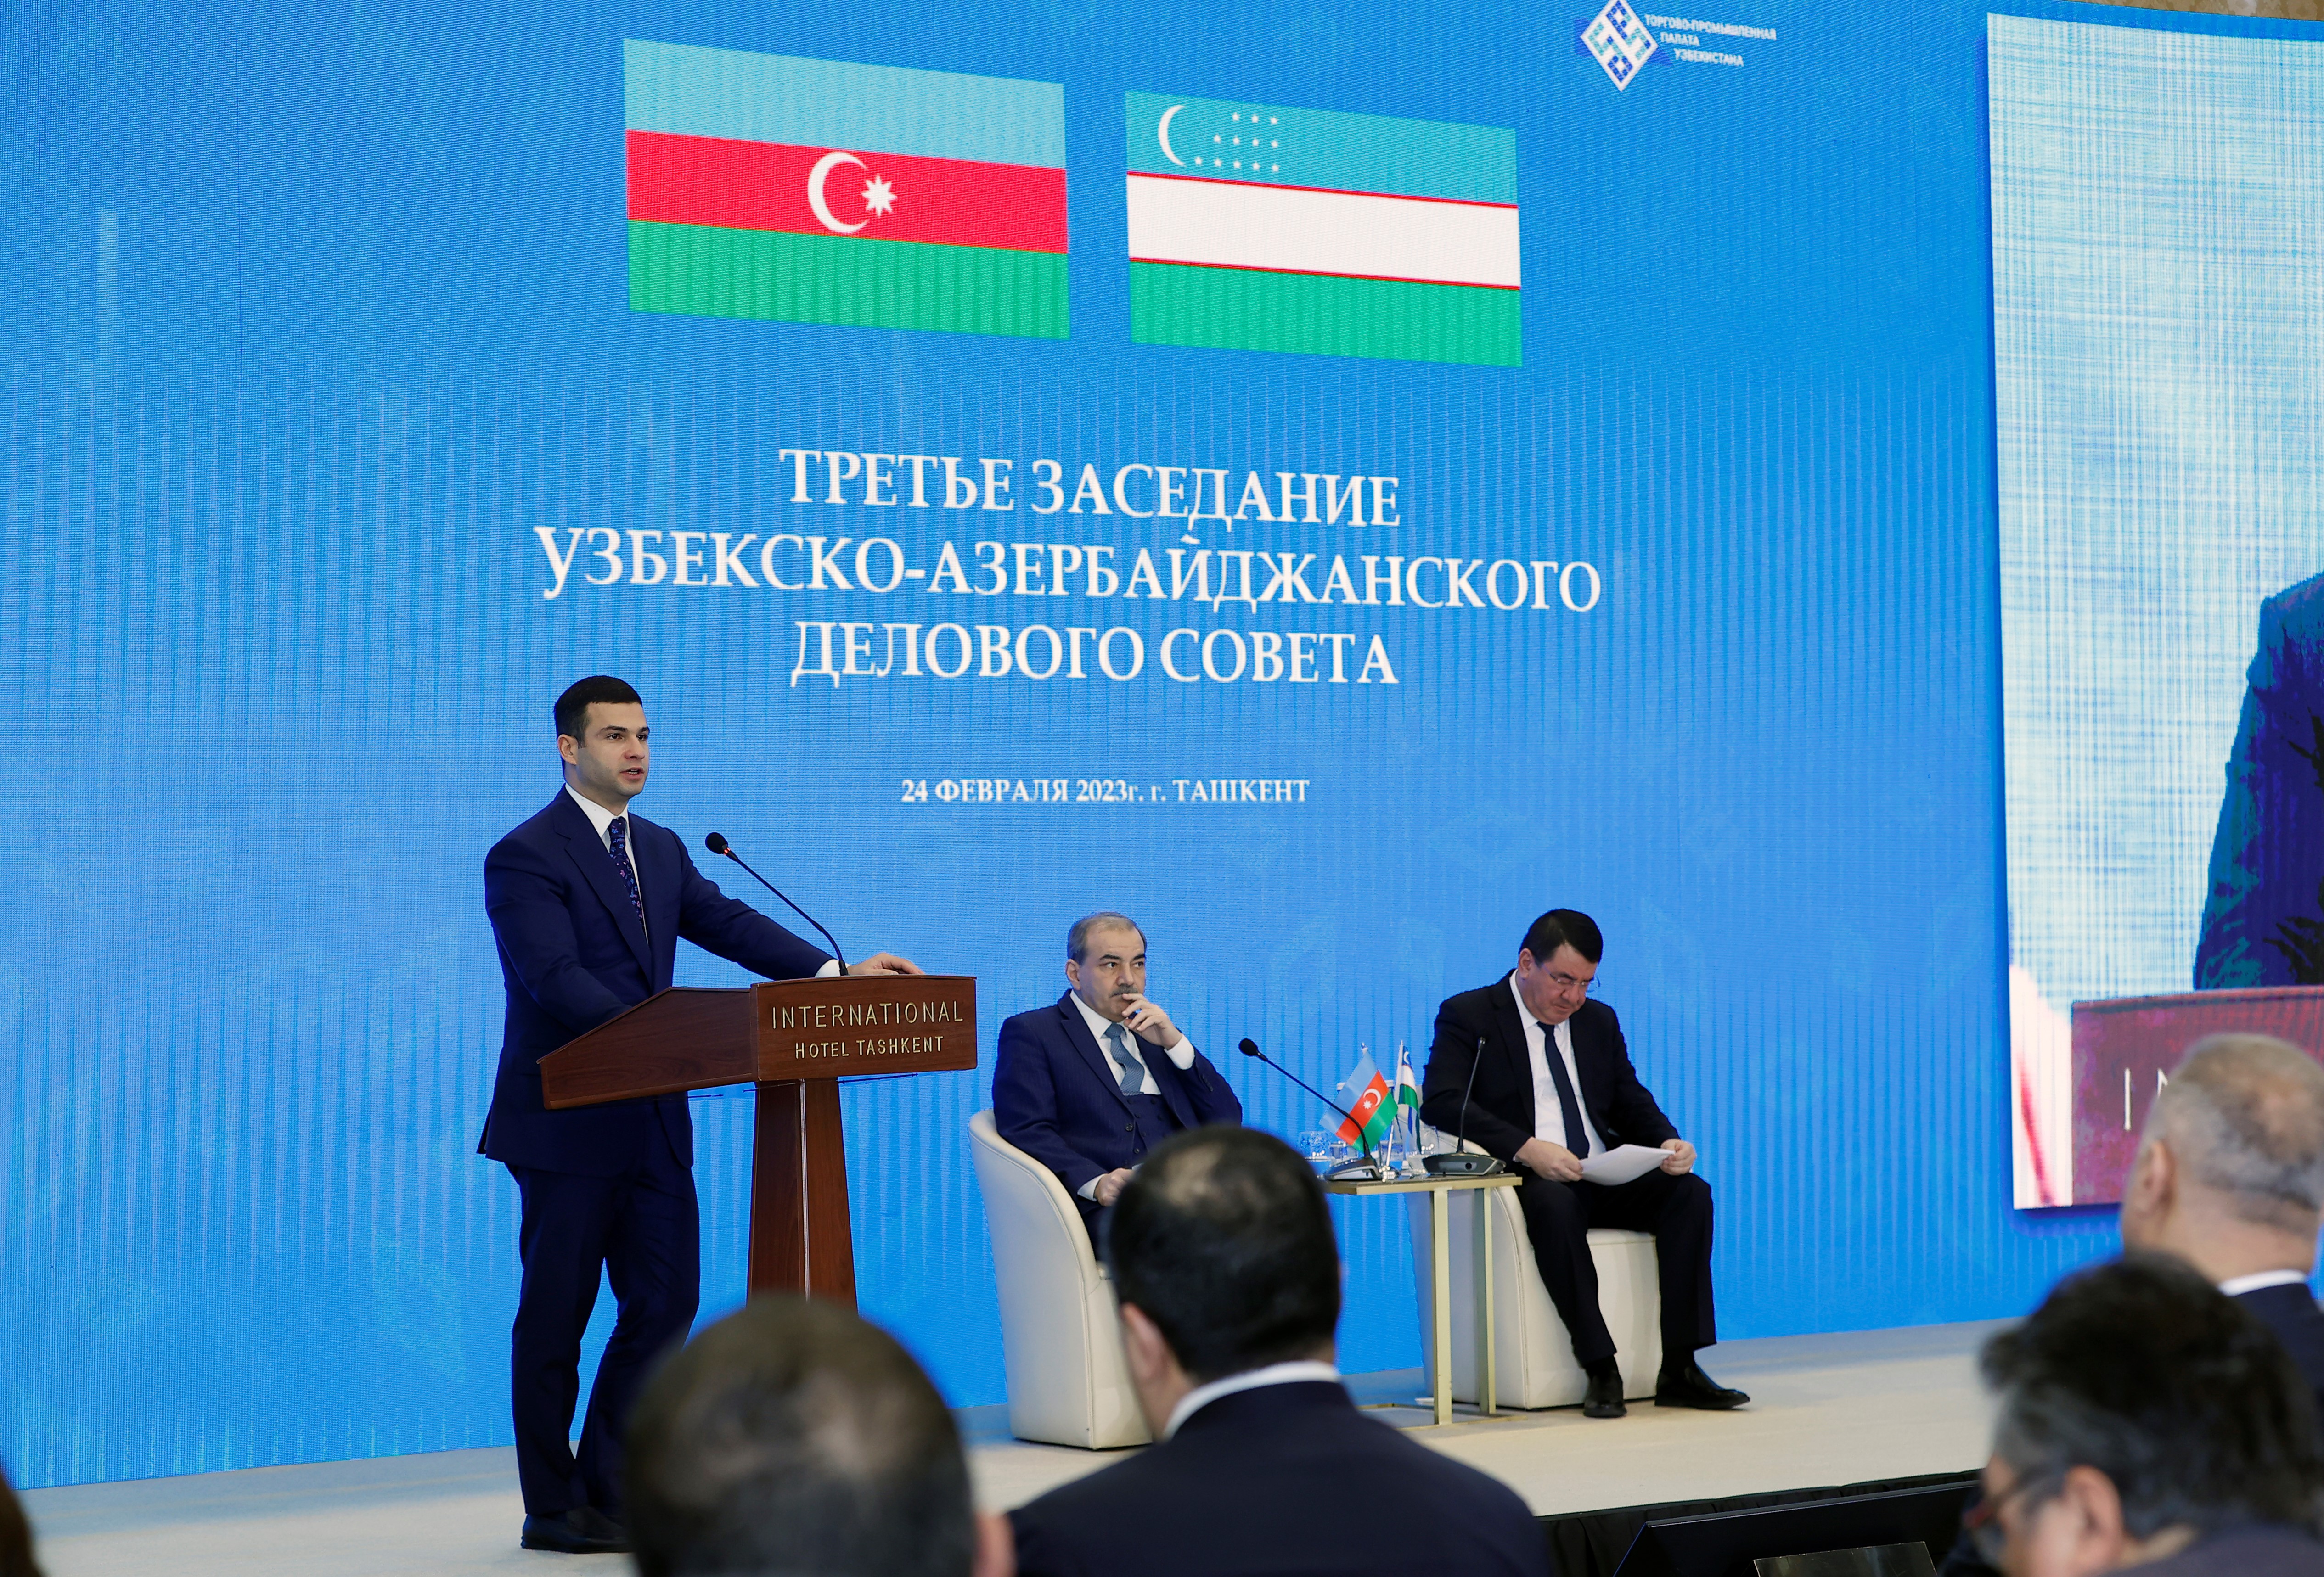 Third meeting of the Uzbekistan-Azerbaijan Business Council held 